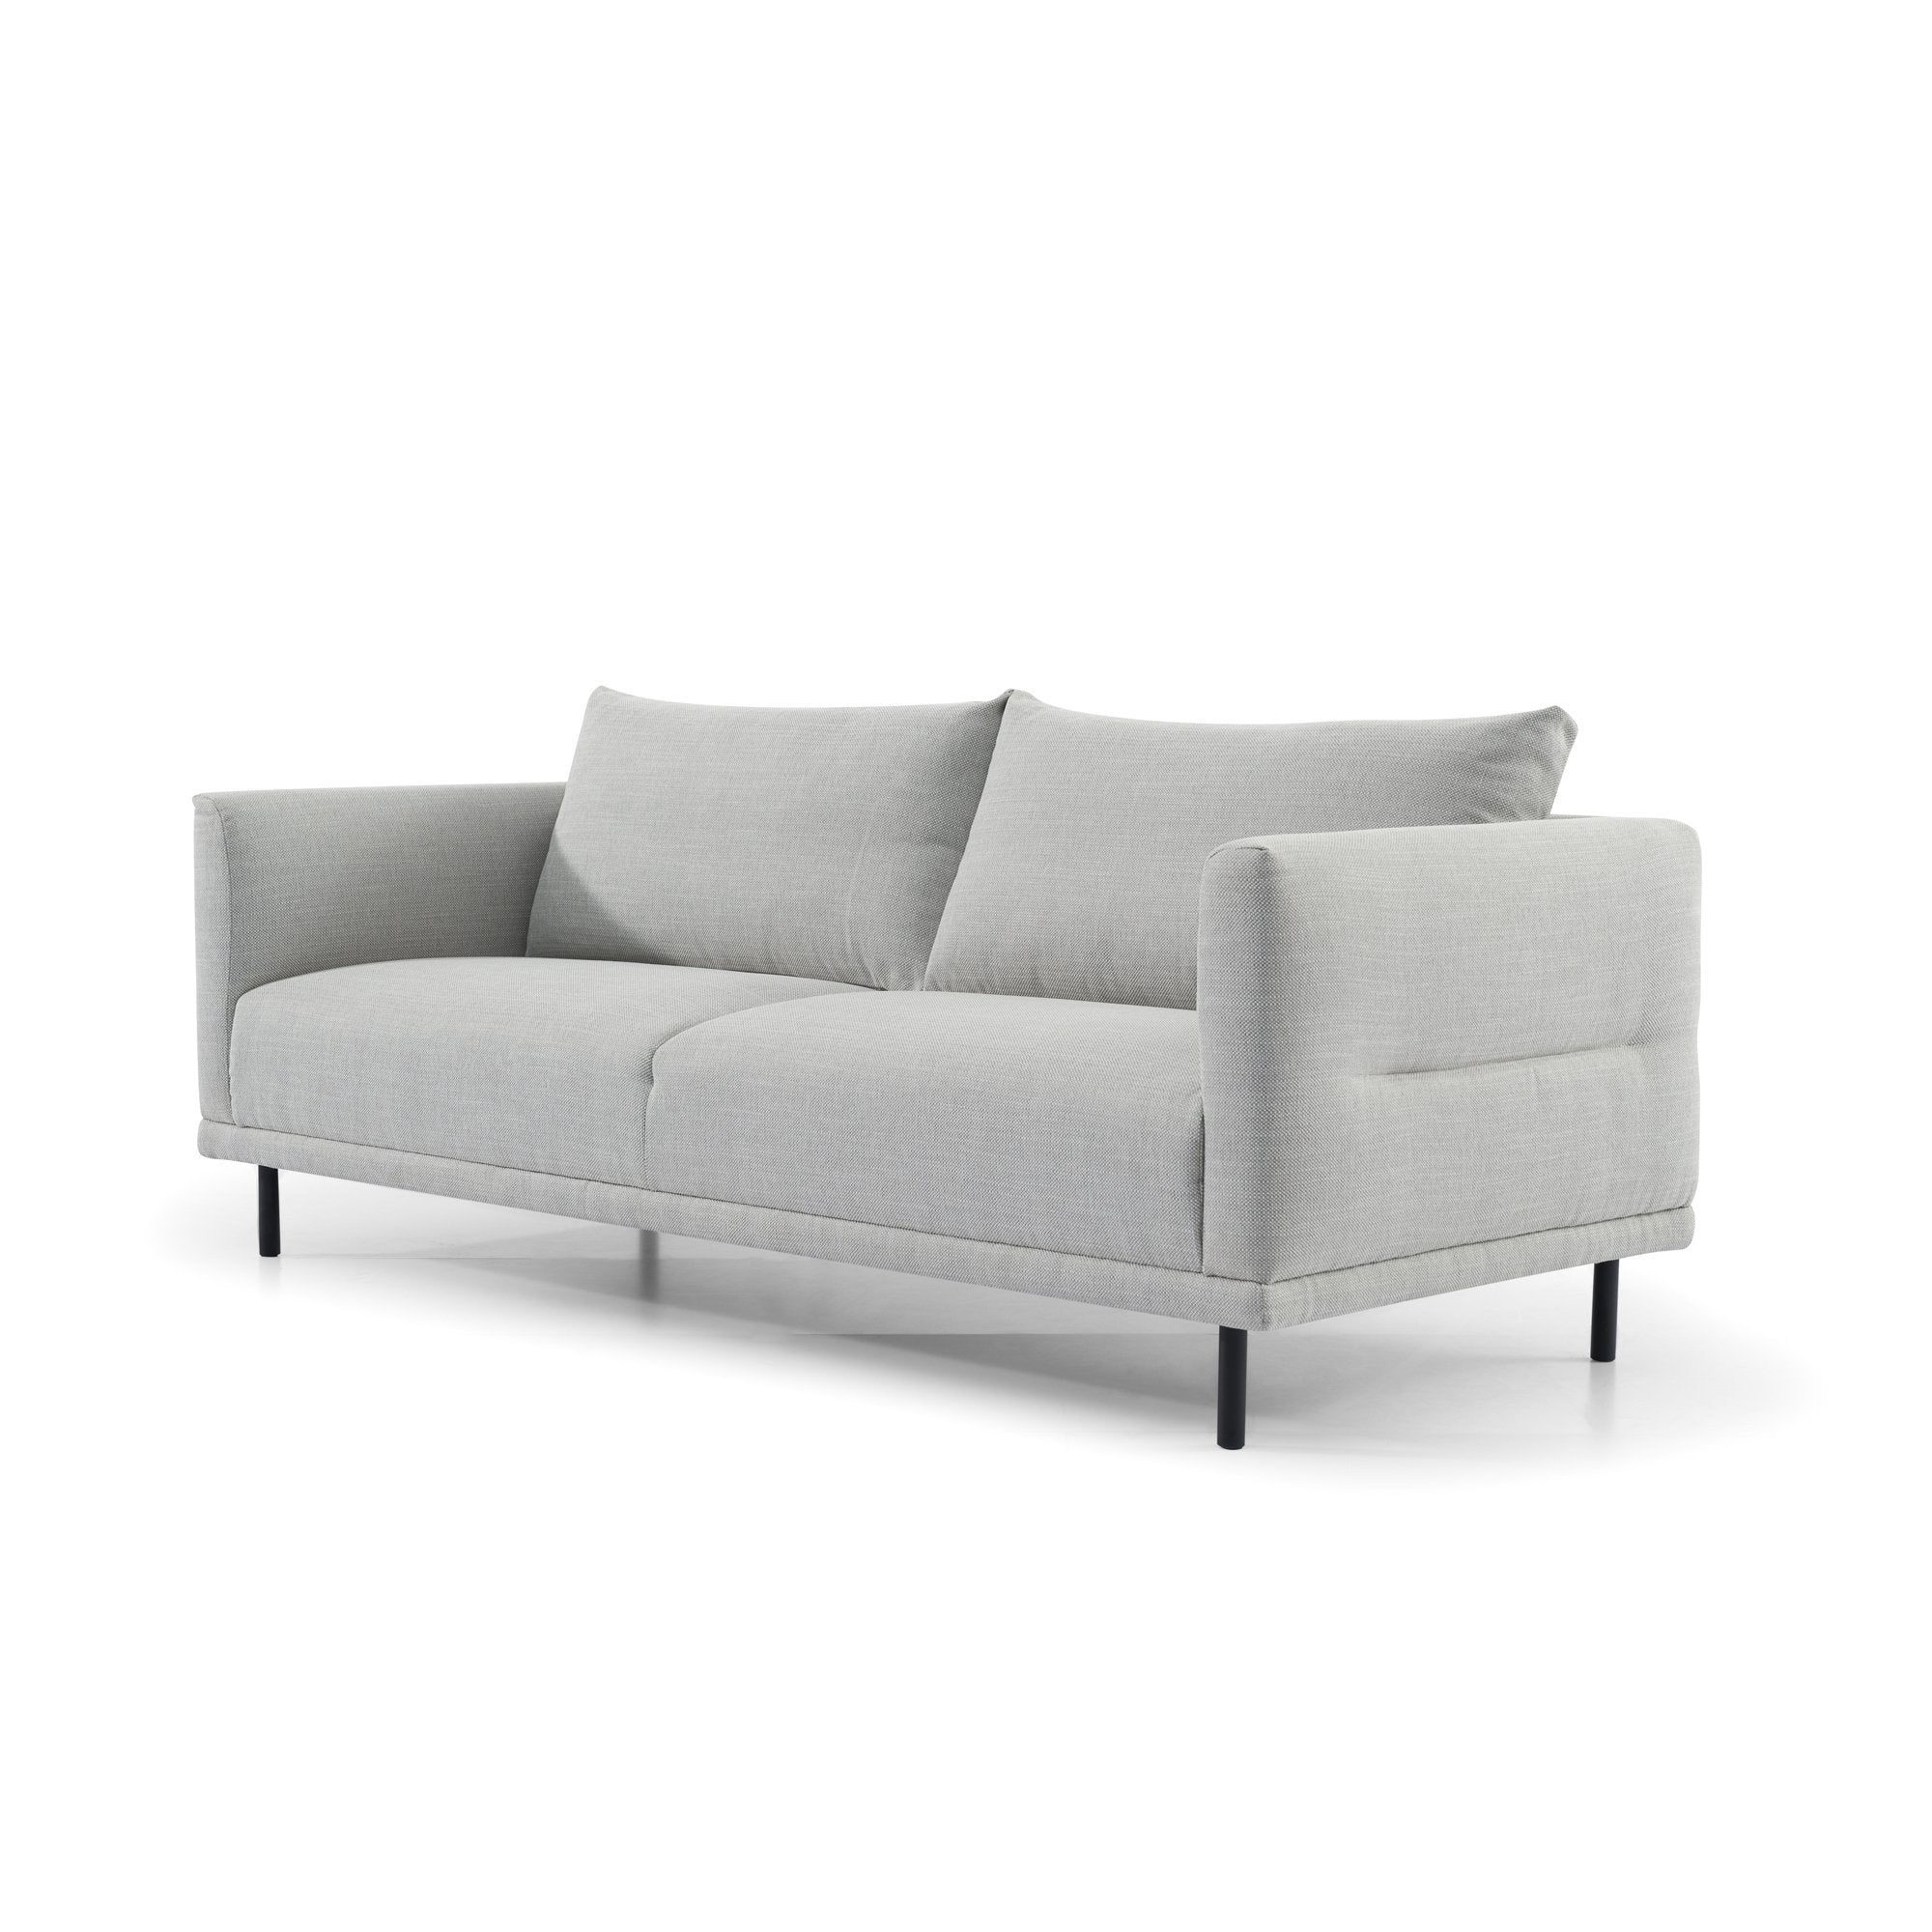 Ava 3 Fabric Seater Sofa - Light Texture Grey with BlackLegs